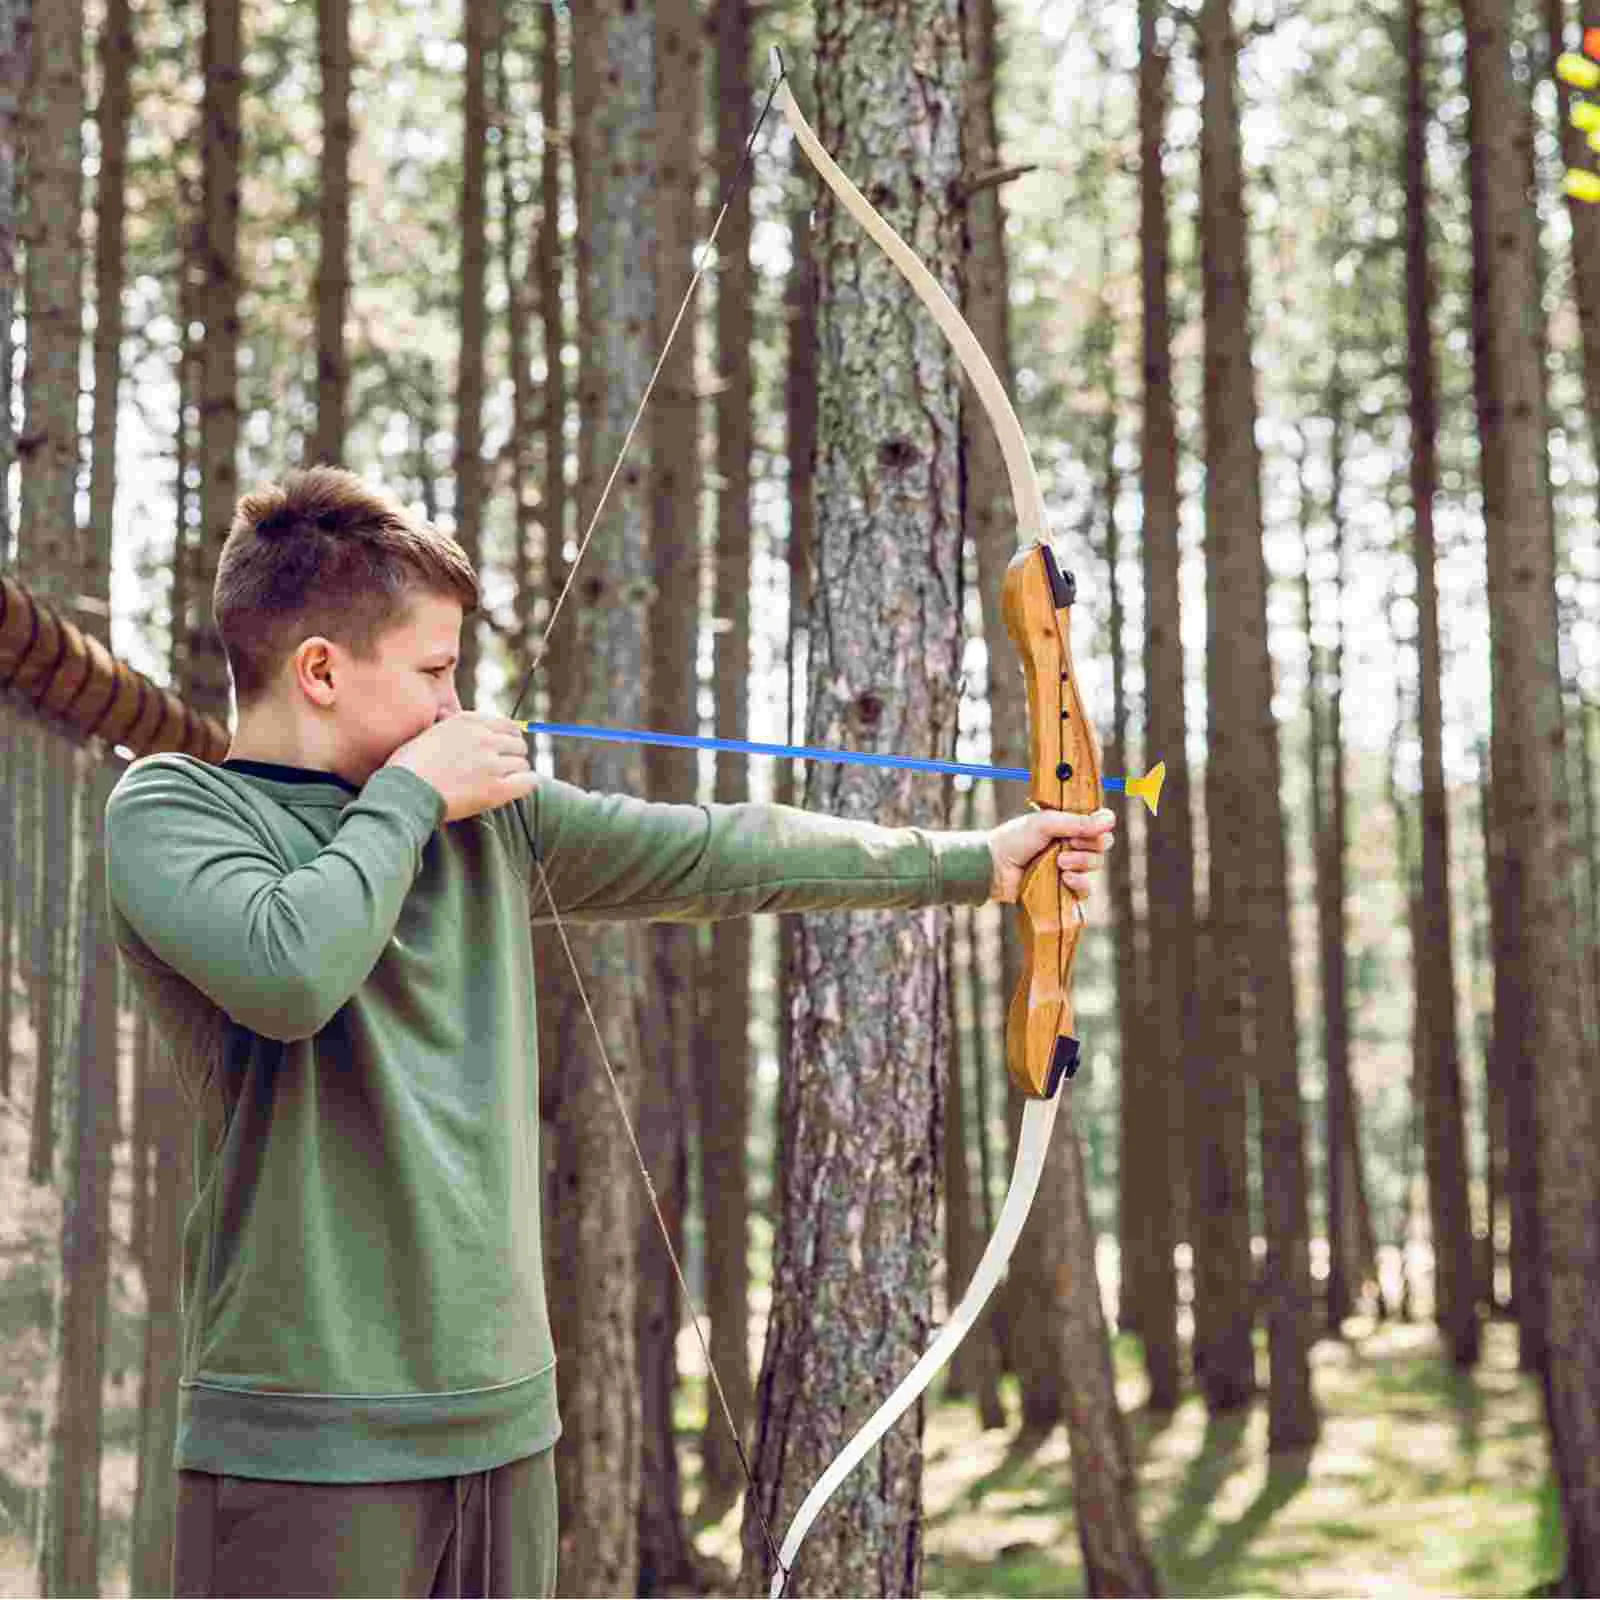 

Kids Suction Cup Arrows Toys PVC Plastic Sucker Arrows Archery Bow Replacement Kids Outdoor Toy 42cm